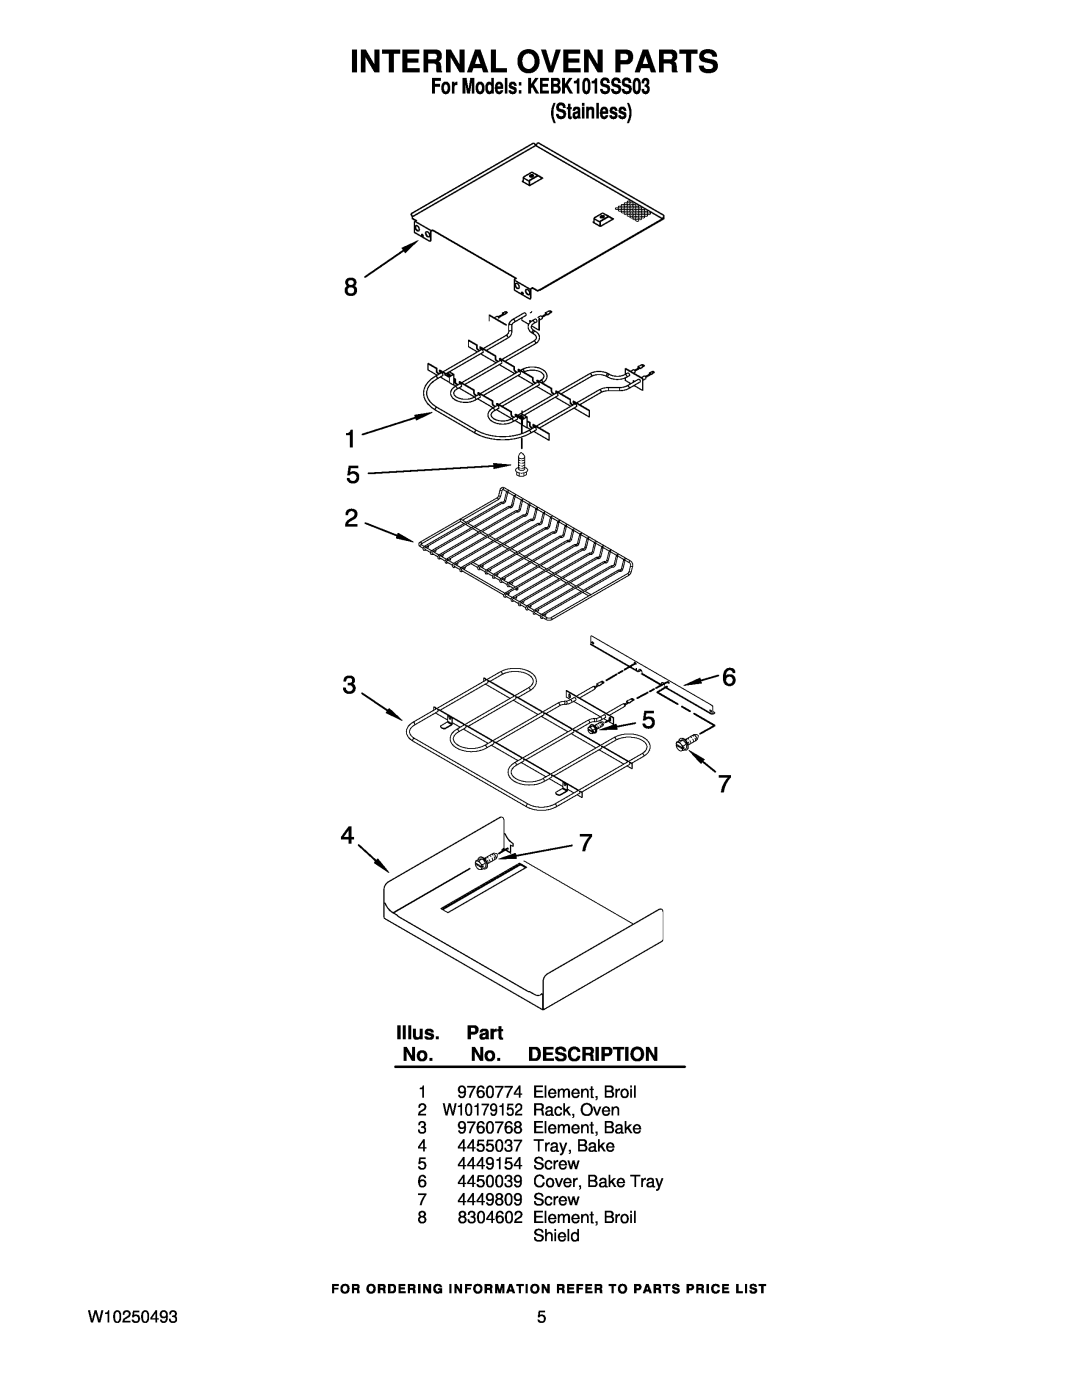 KitchenAid manual Internal Oven Parts, Illus. Part No. No. DESCRIPTION, For Models KEBK101SSS03 Stainless 